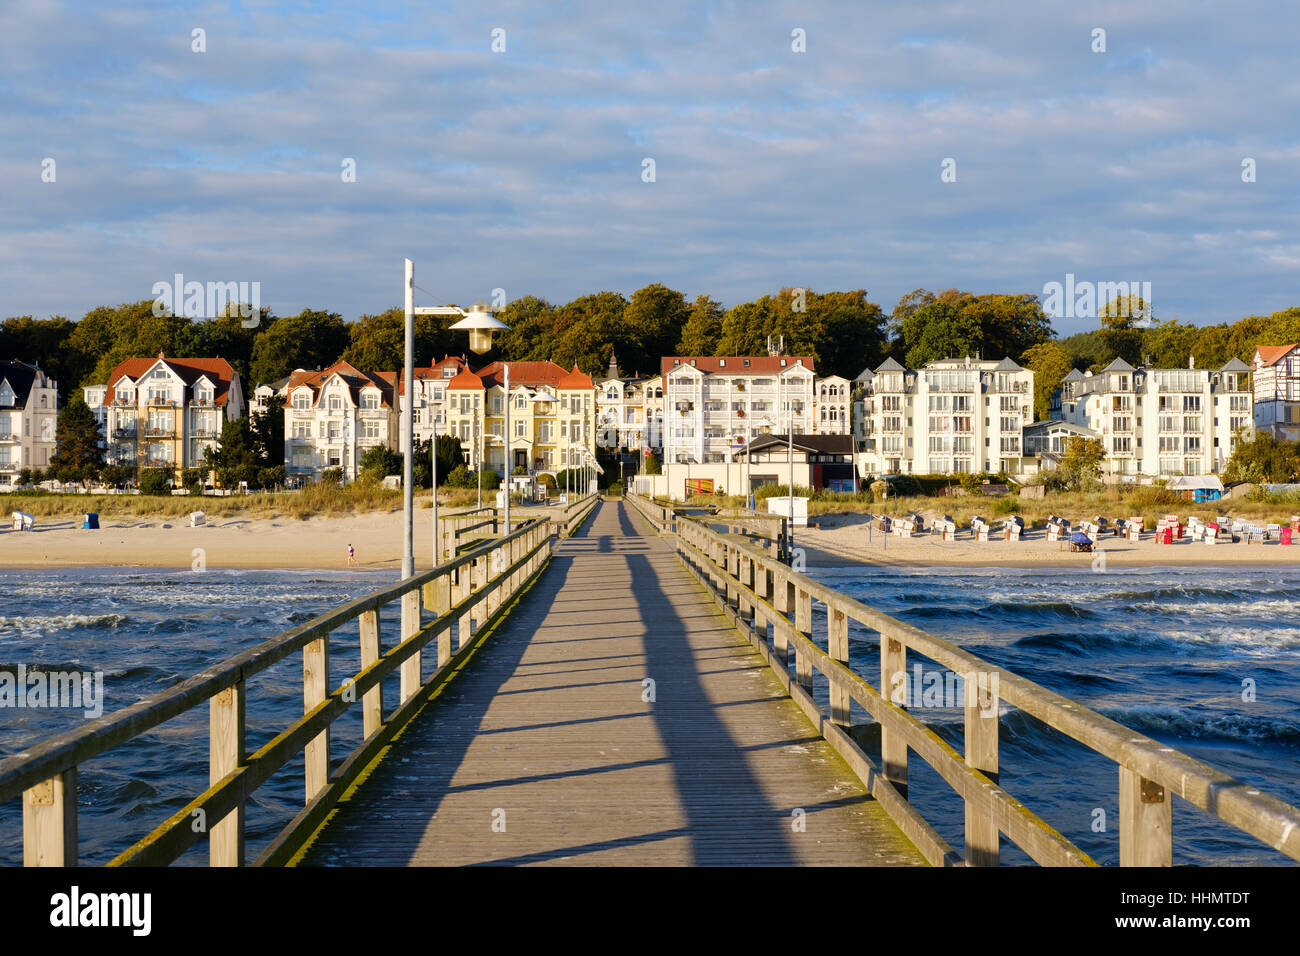 Pier in Seebad Bansin, Seebad, Usedom, Mecklenburg-Western Pomerania, Deutschland Stockfoto